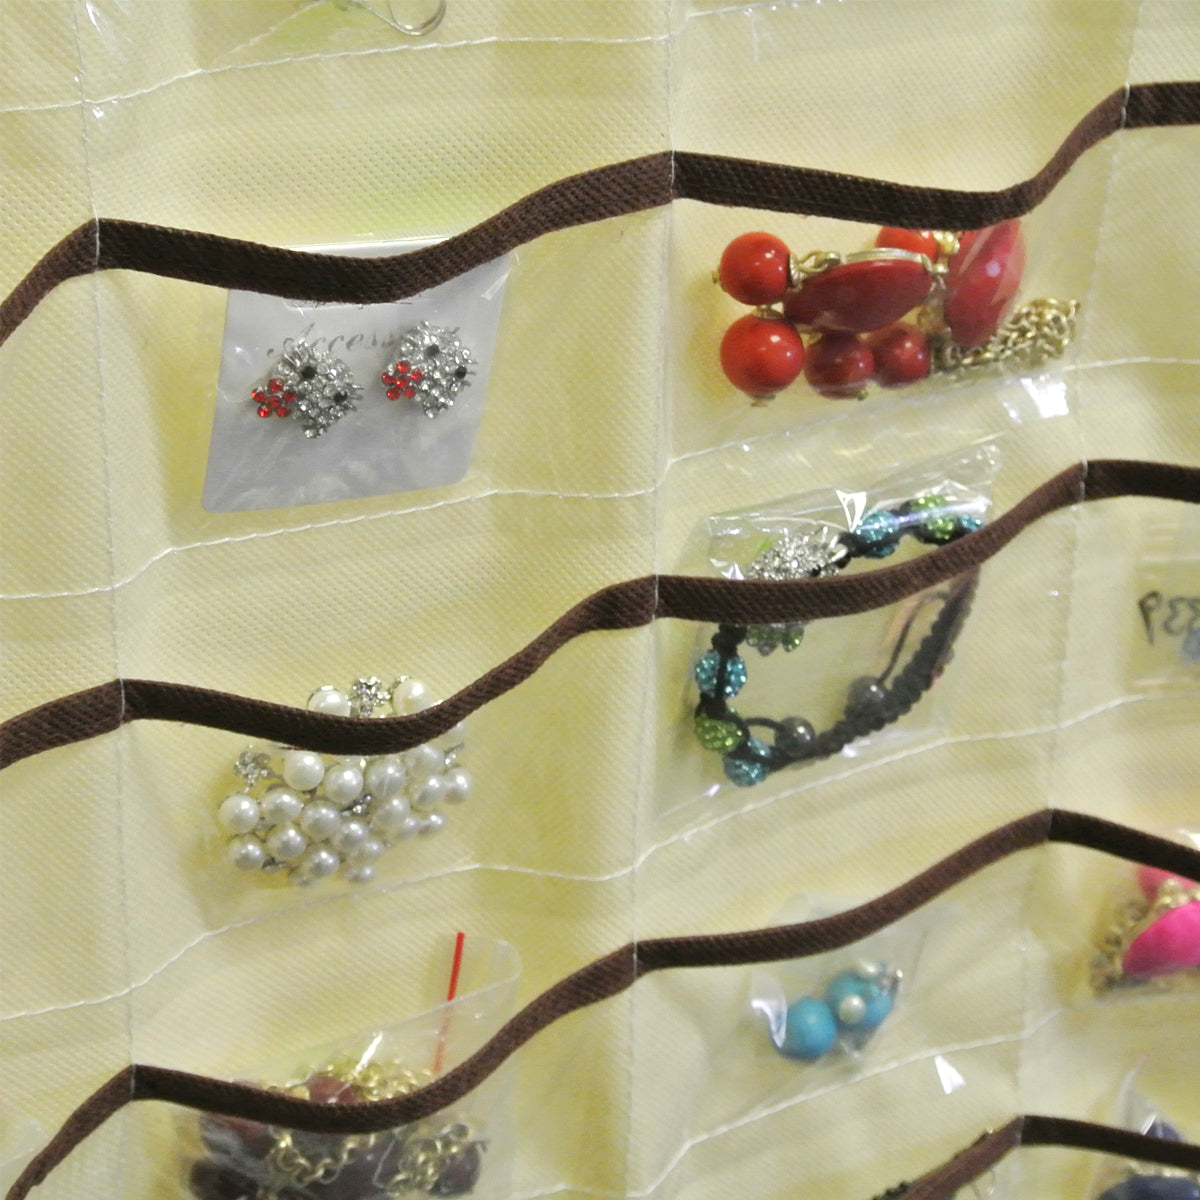 80 Pocket Hanging Jewelry Organizer + Large Burgundy Silk Embroidered Jewelry Roll